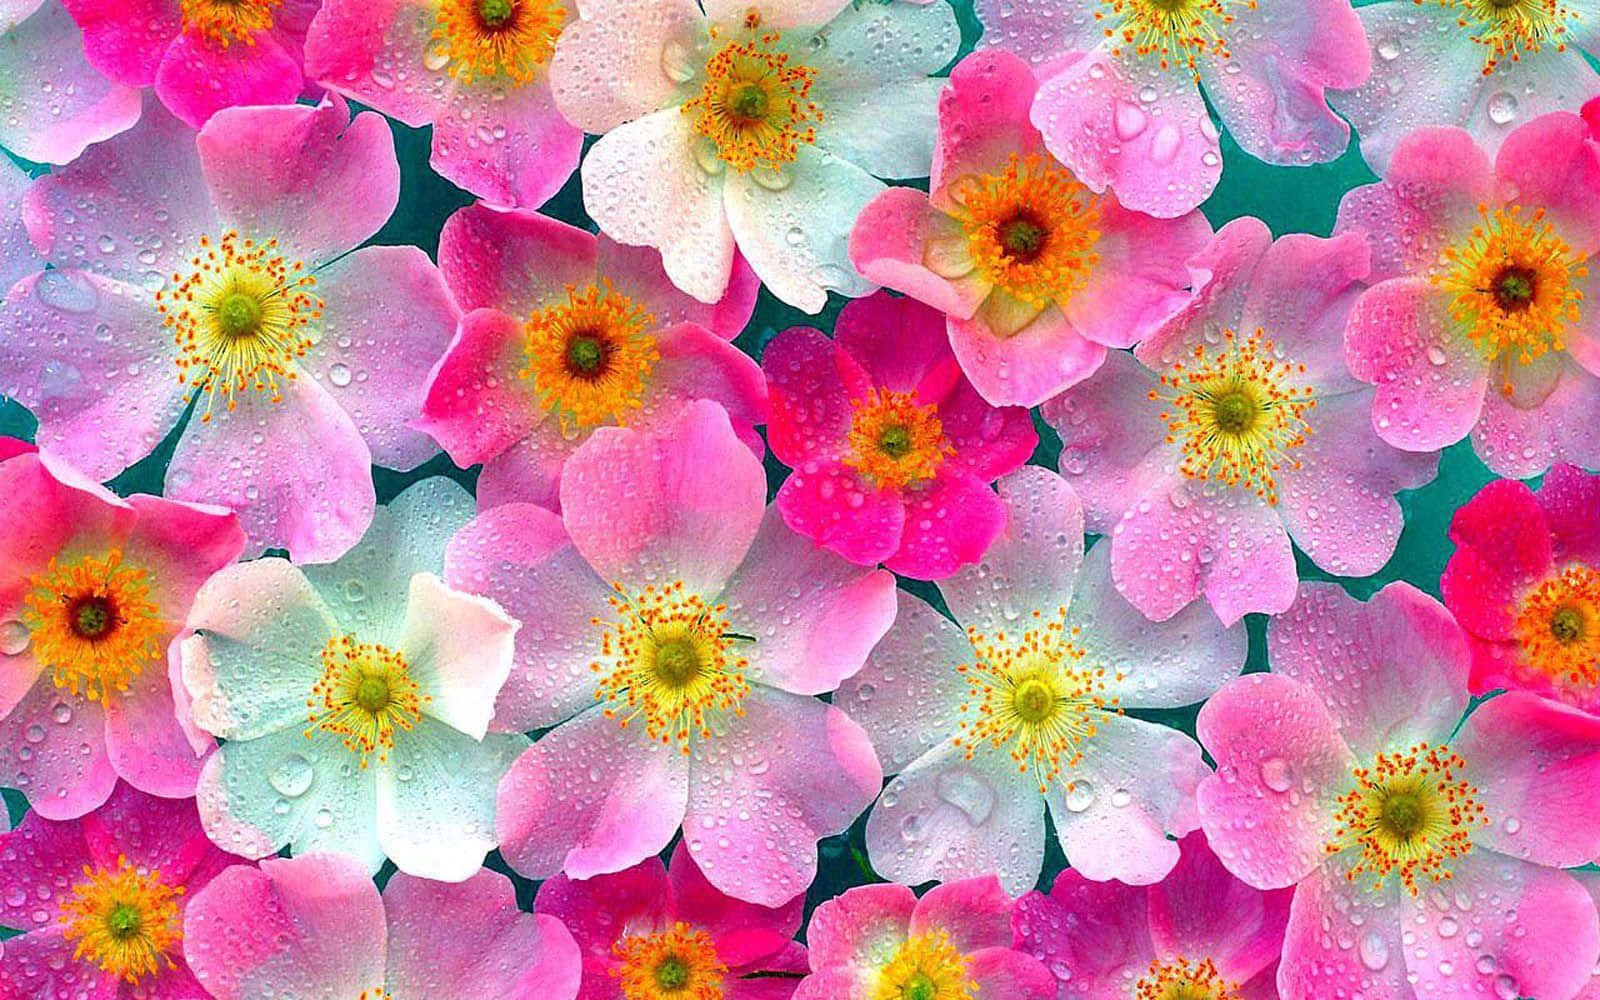 Alegratu Día Con Este Hermoso Patrón De Flores Para Tu Portátil. Fondo de pantalla